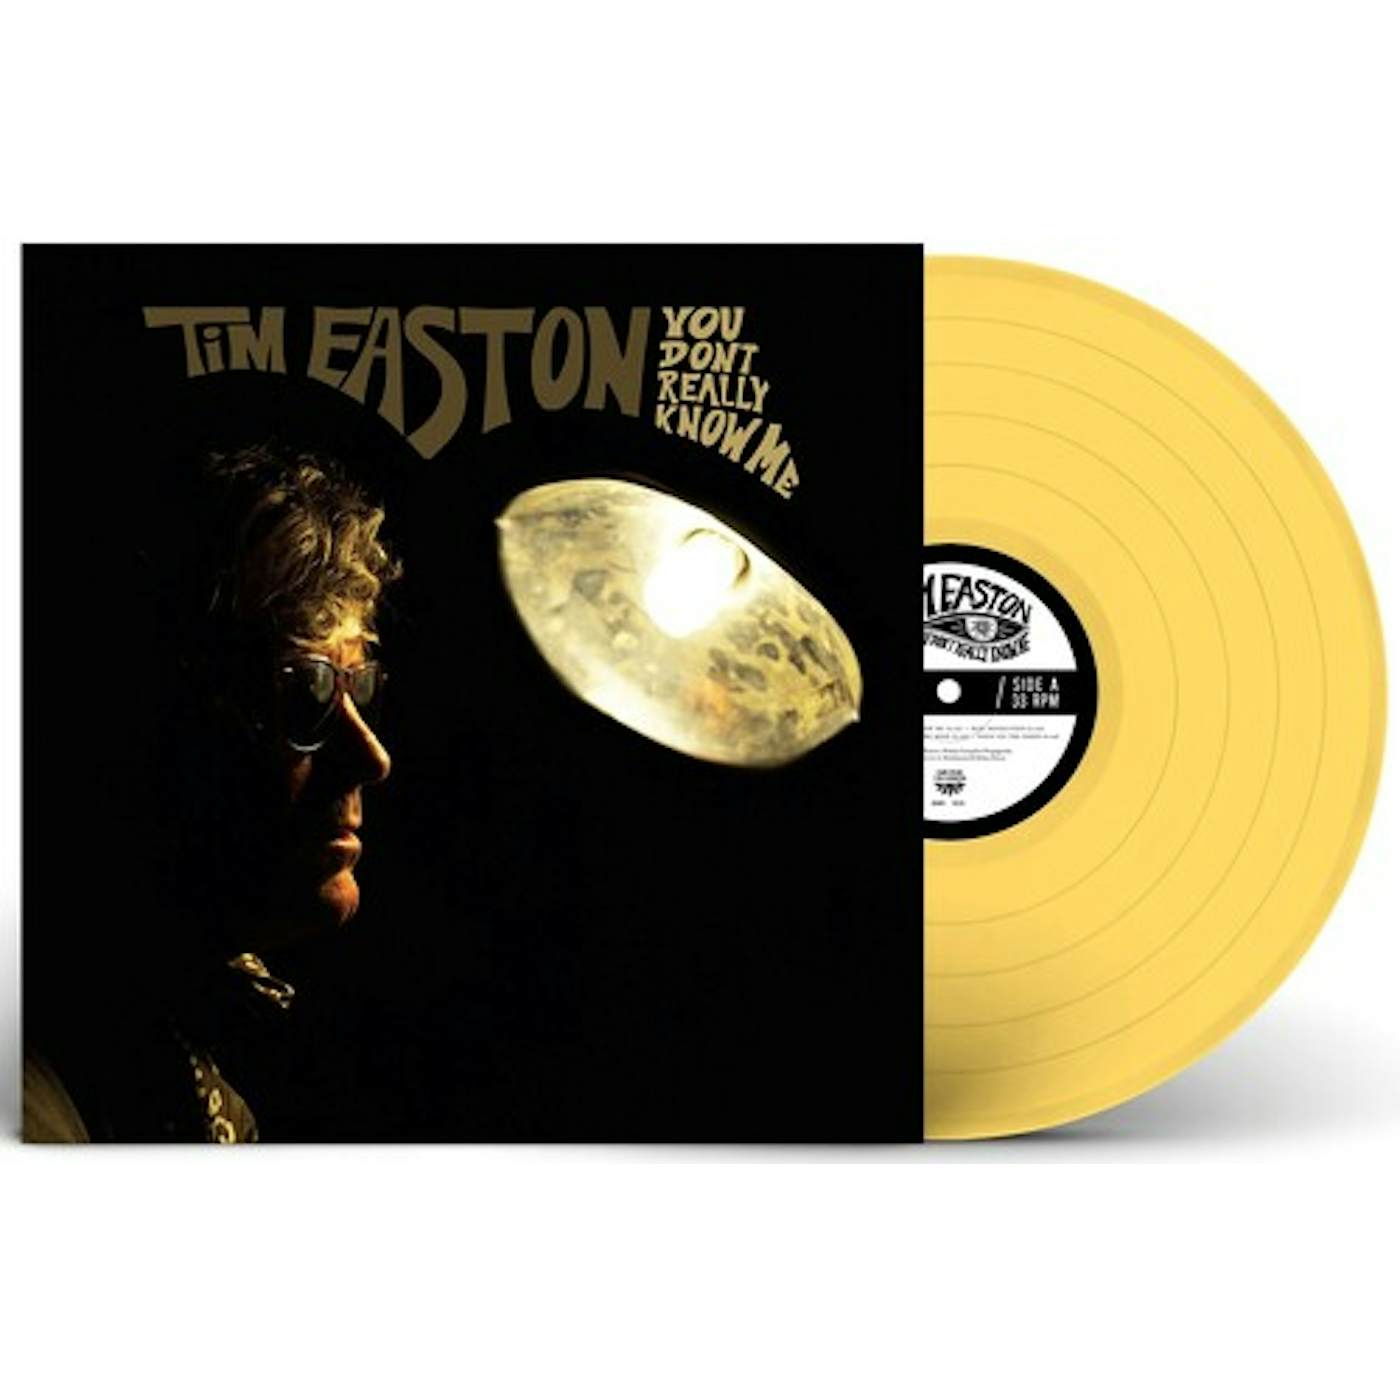 Tim Easton You Don't Really Know Me Vinyl Record